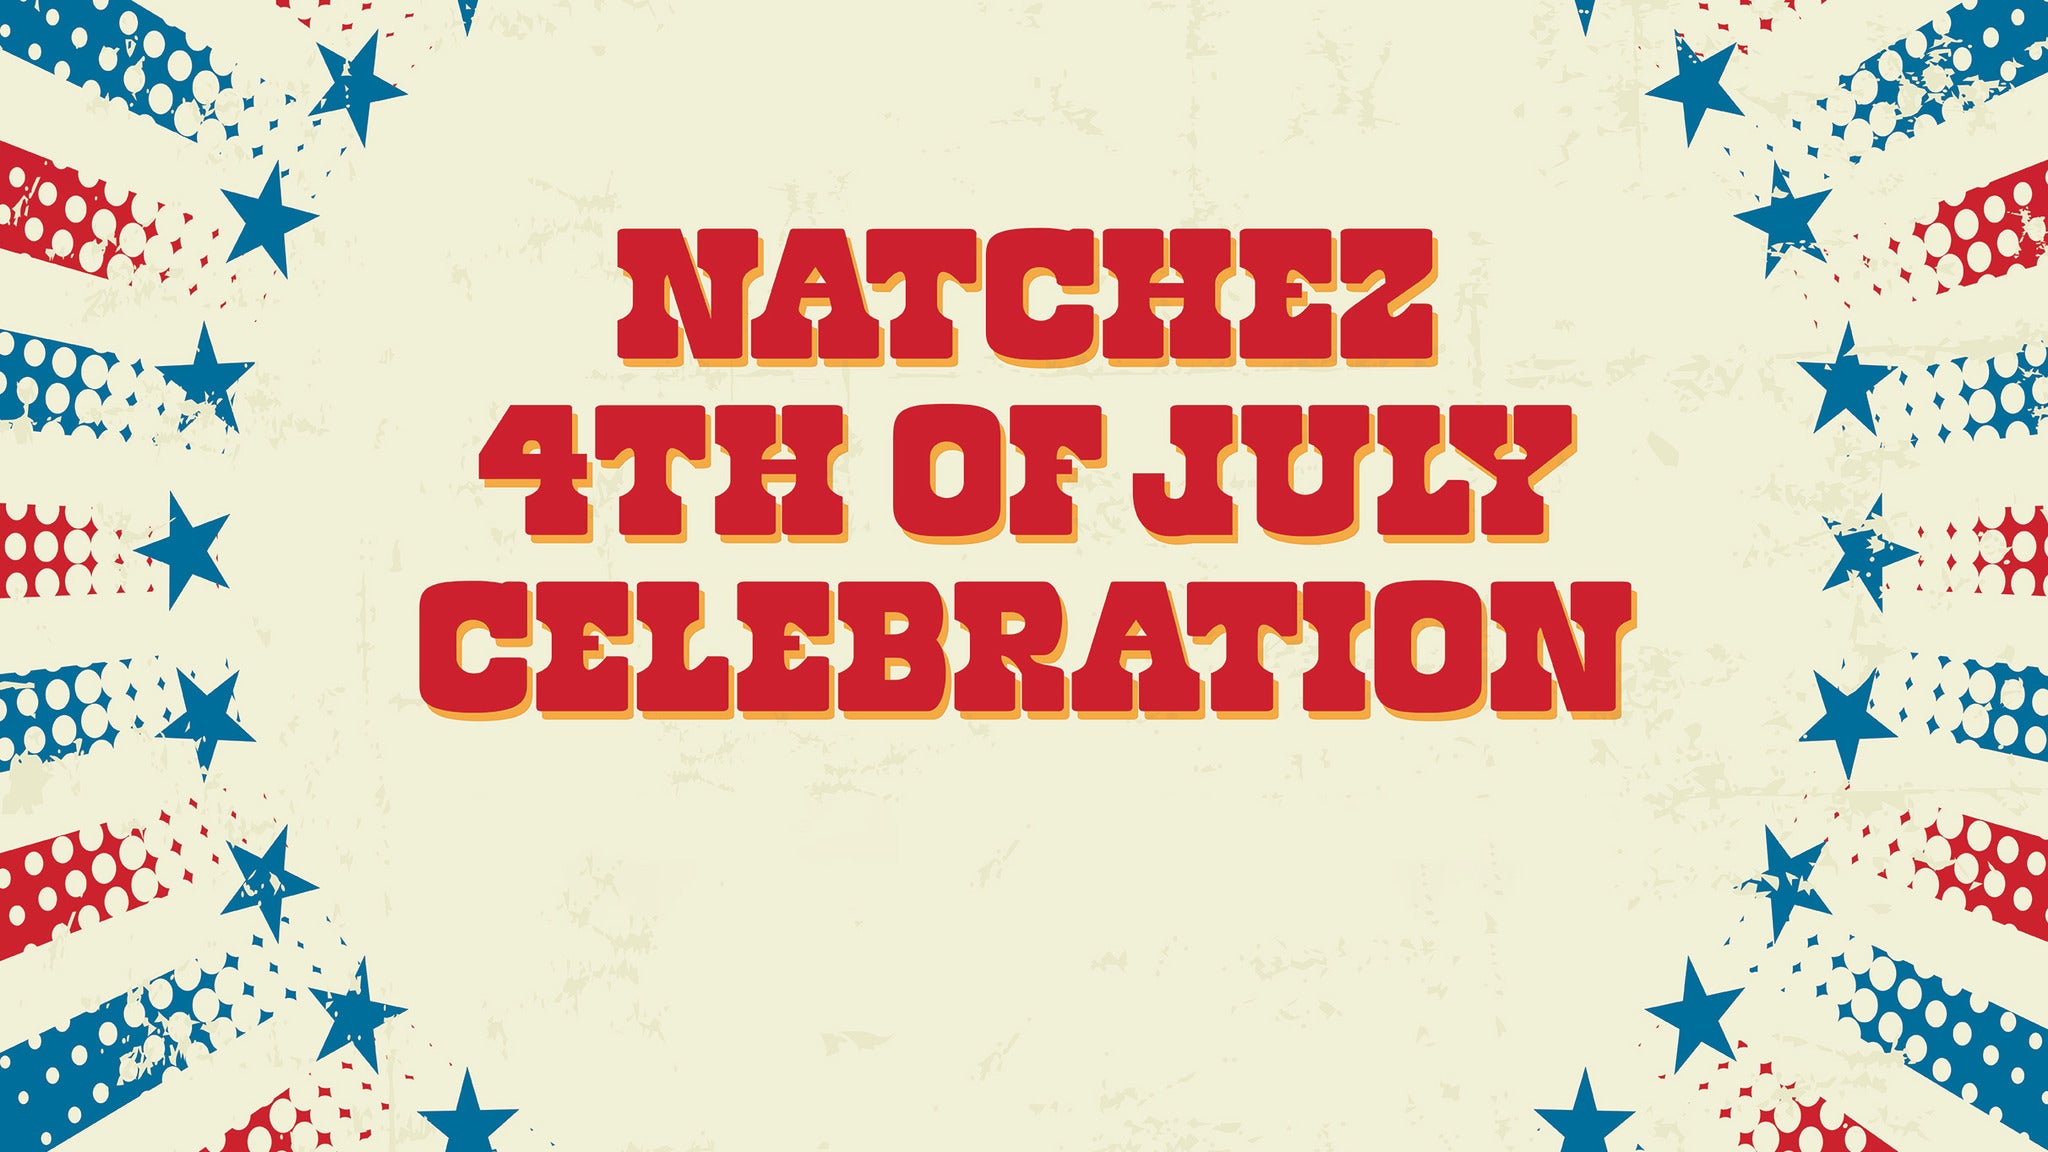 Natchez 4th of July Celebration - Saturday